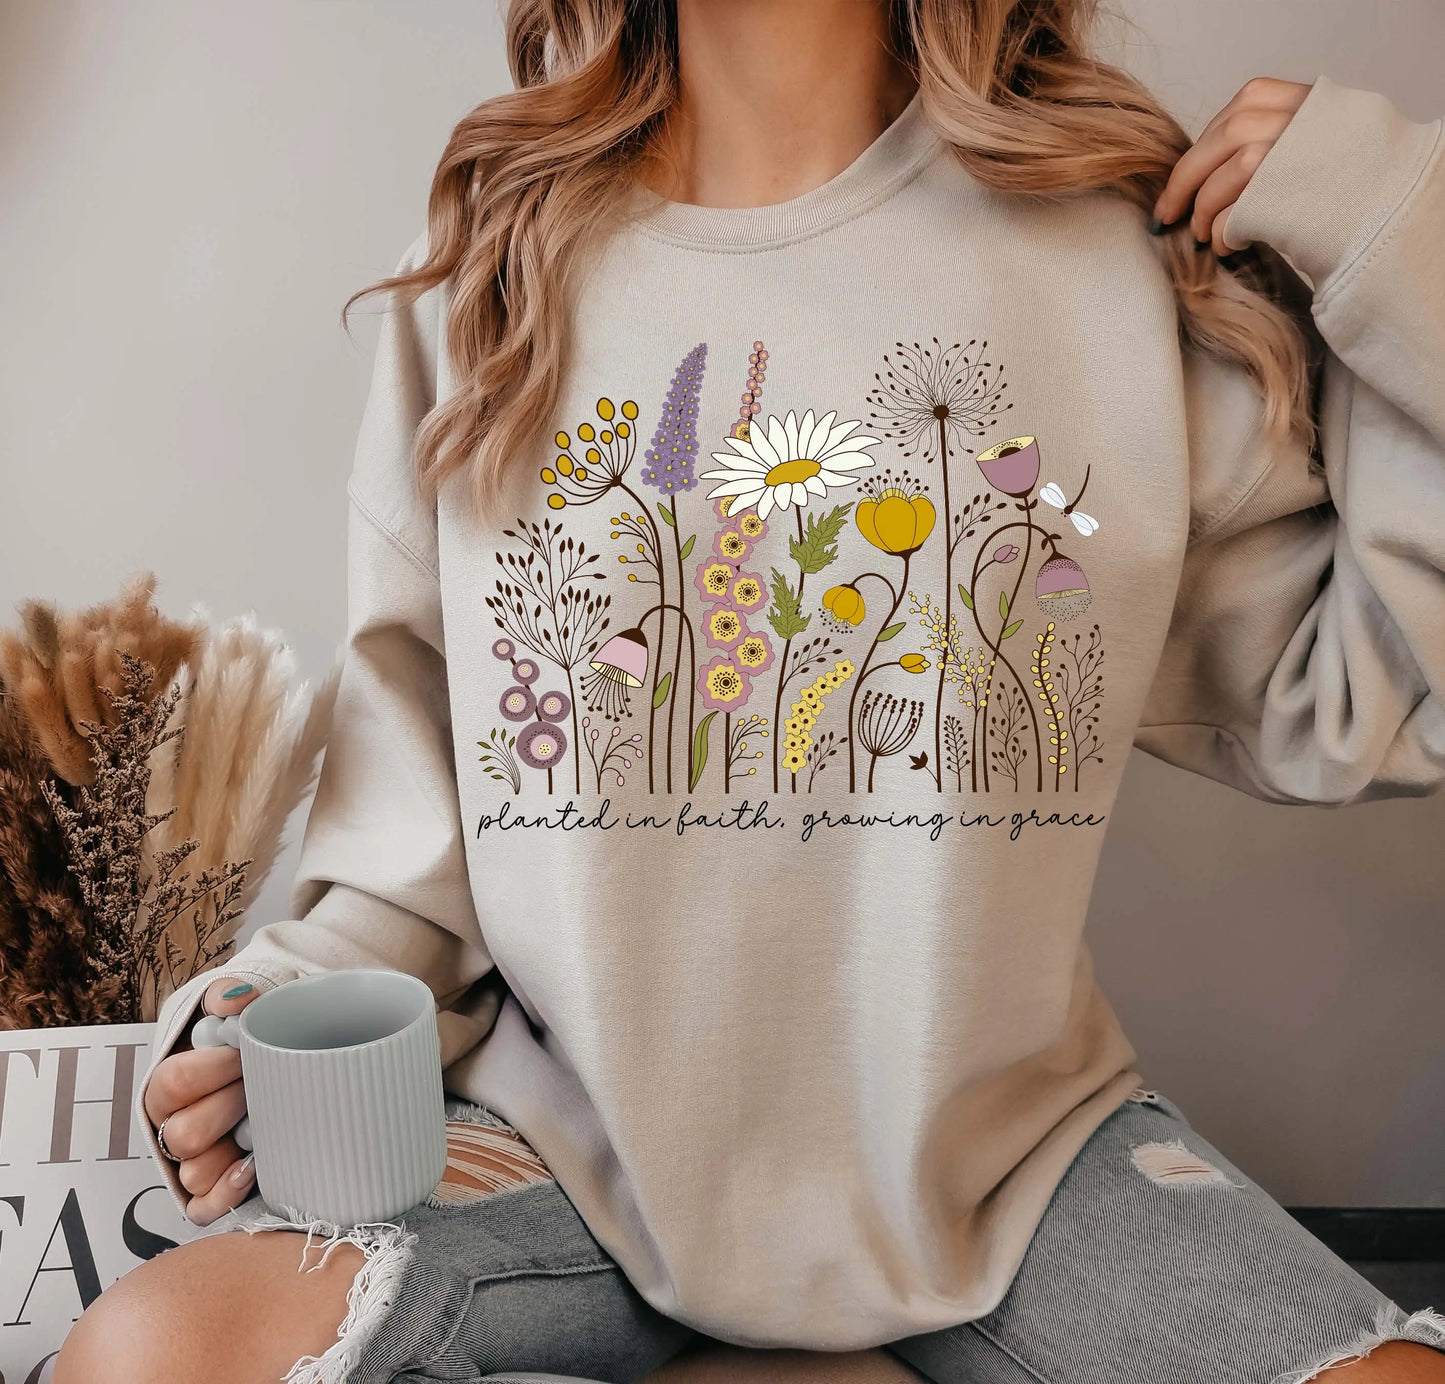 Wildflower Sweatshirt - Planted in Faith, Growing in Grace teelaunch